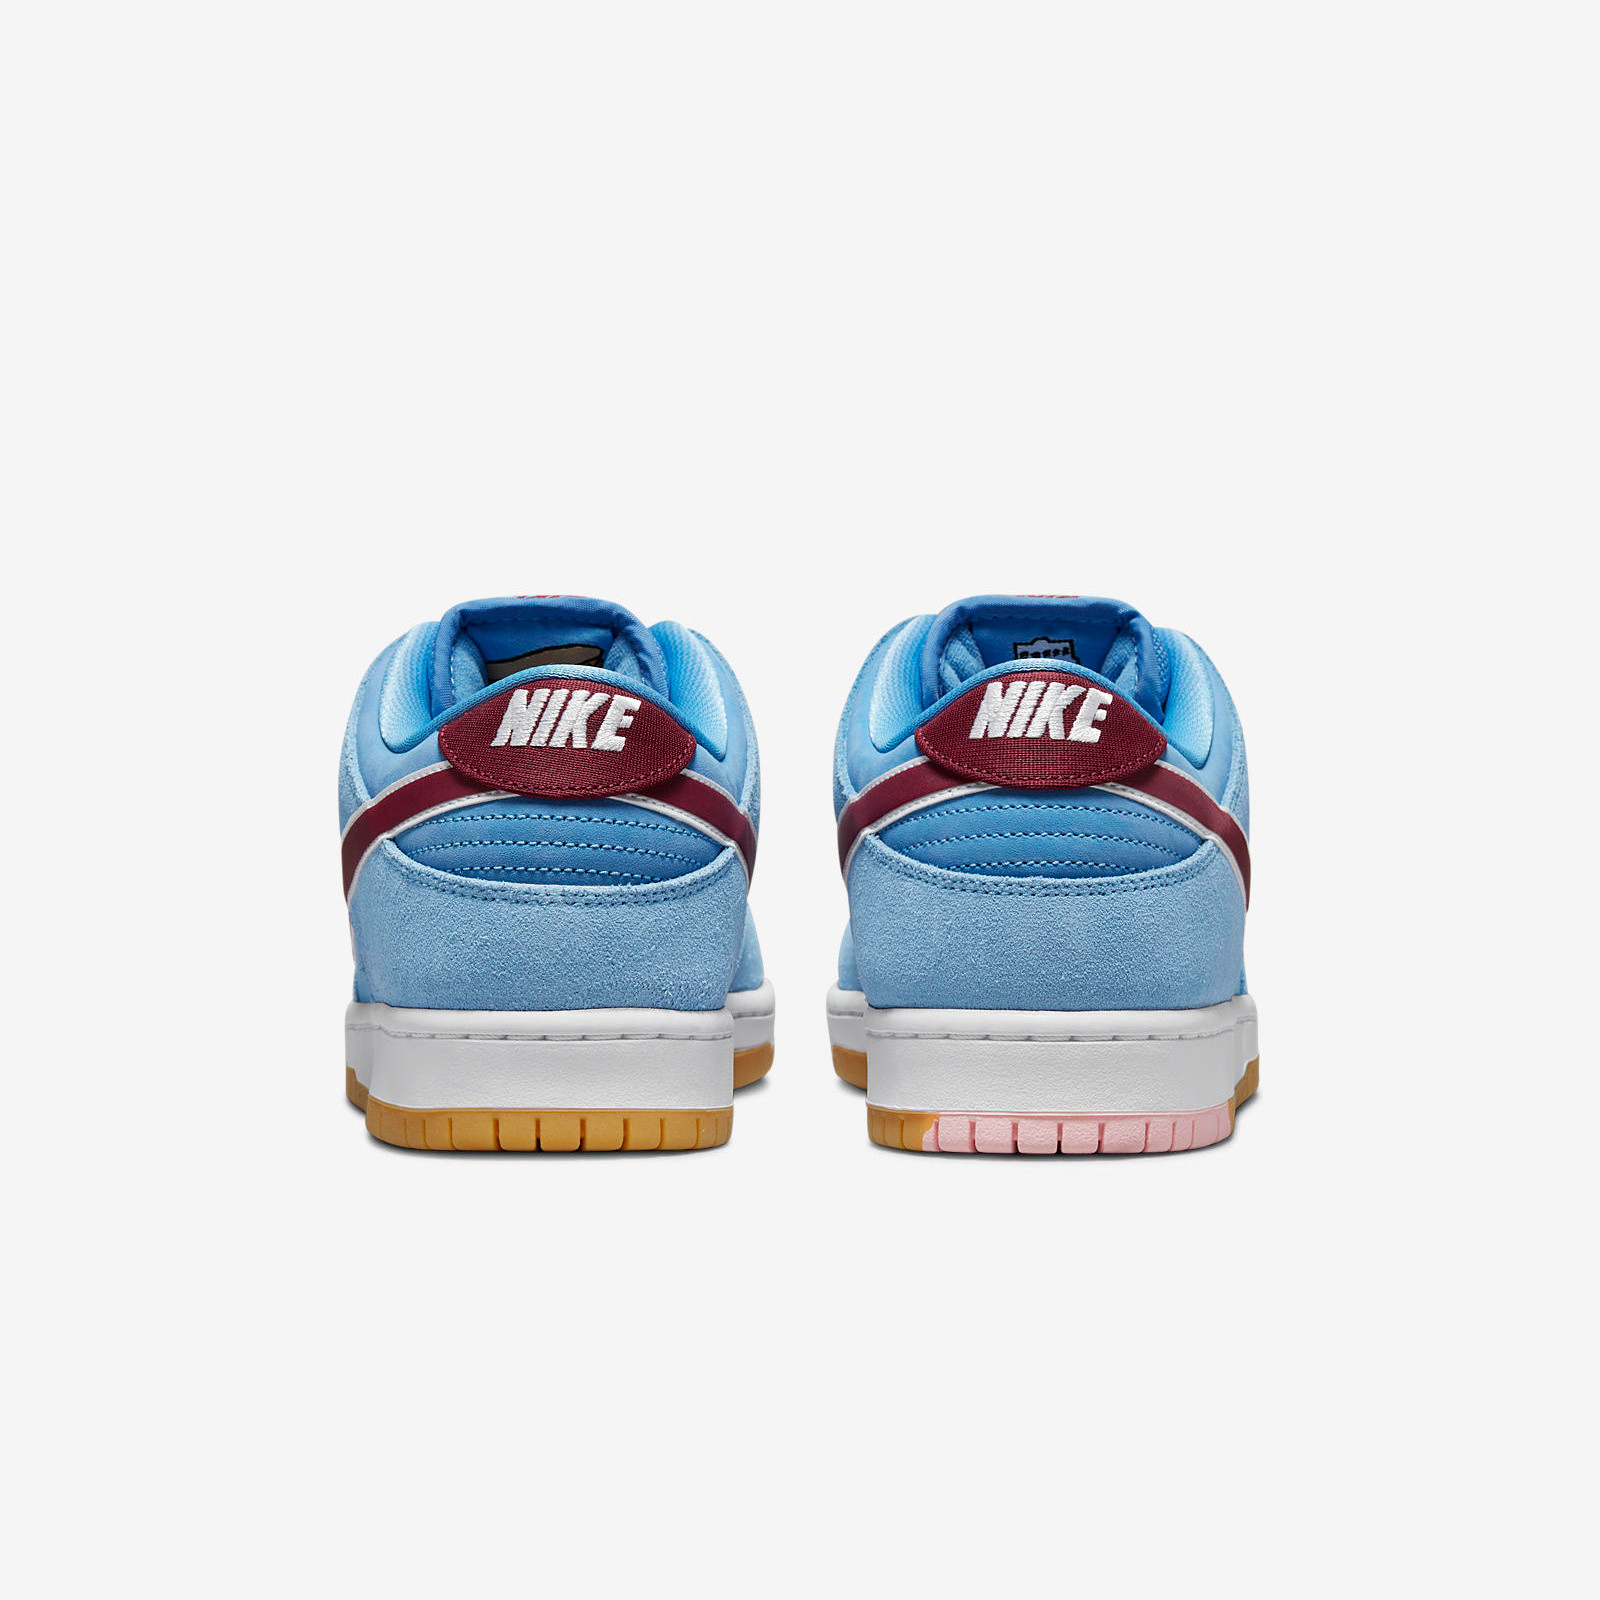 Nike SB Dunk Low
Blue / Maroon